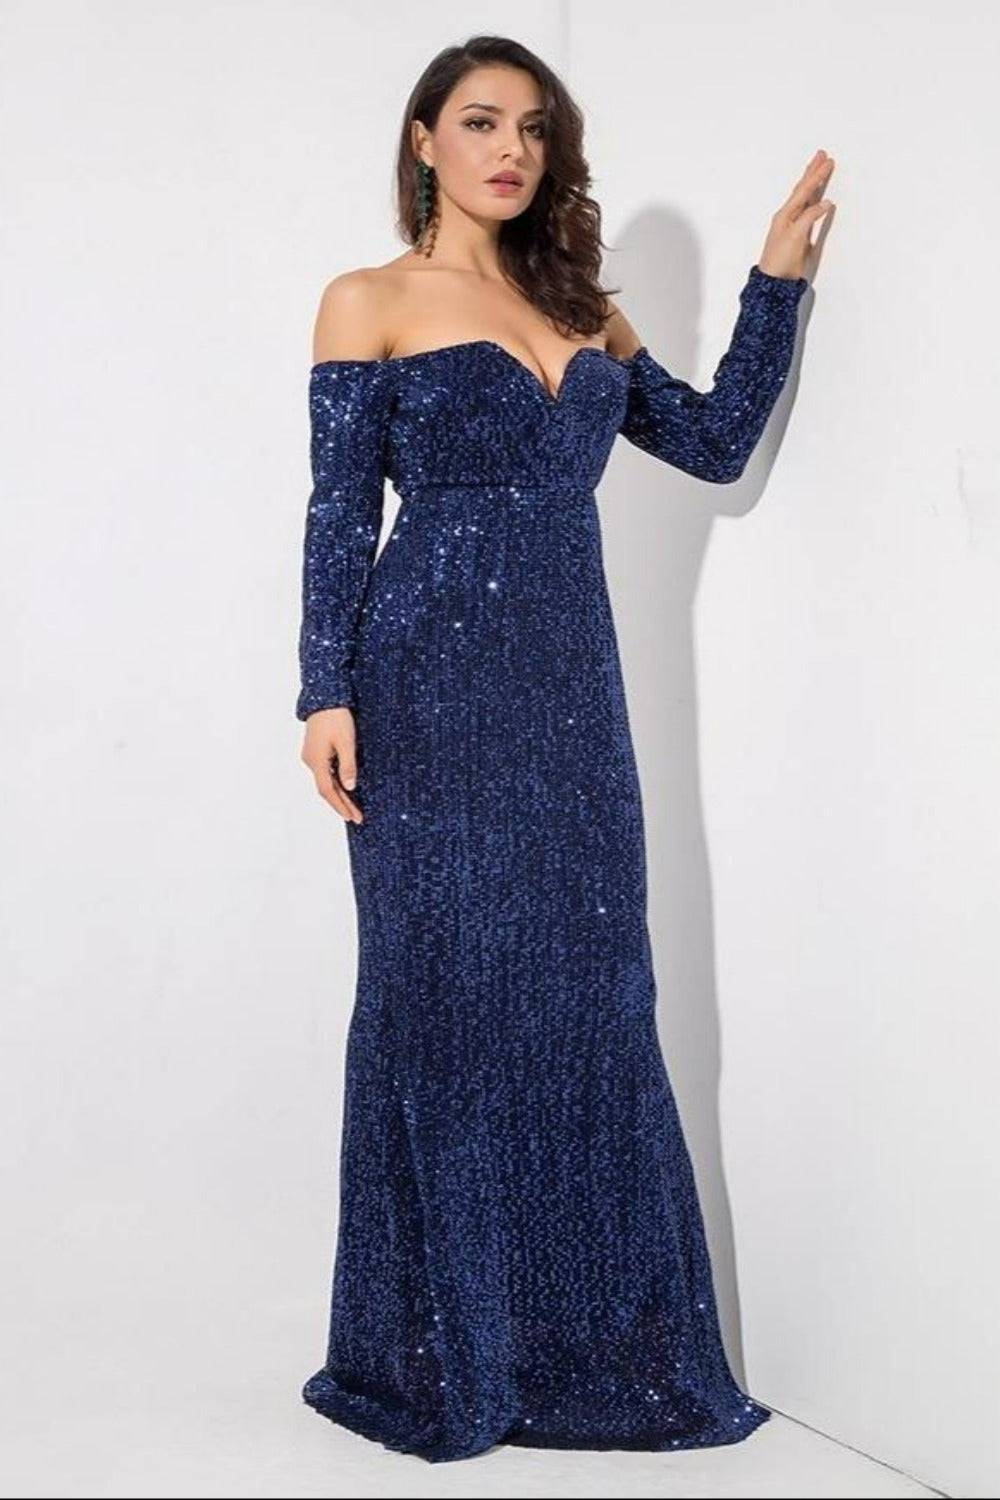 Long Sleeve Off The Shoulder Navy Blue Sequin Maxi Dress - TGC Boutique - Evening Gown